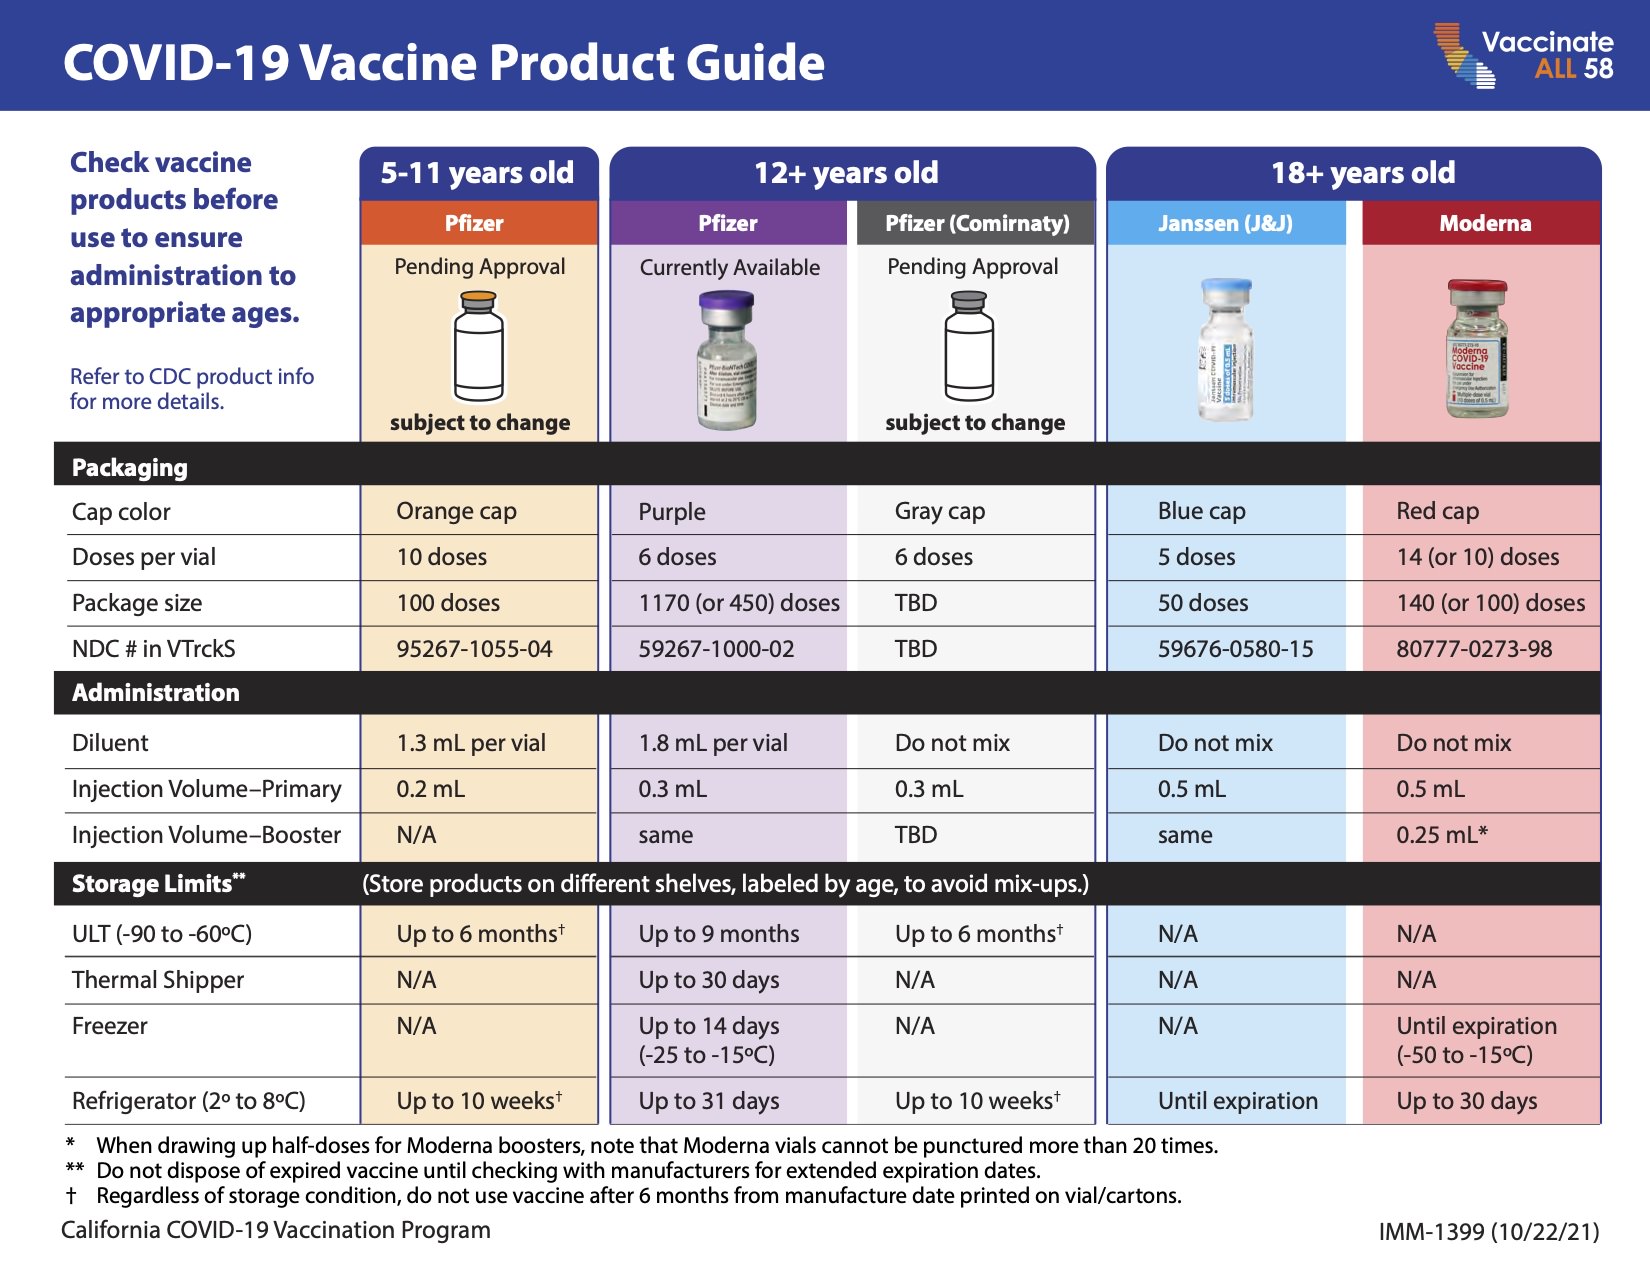 Covid-19 Vaccine Product Guide [11/21]